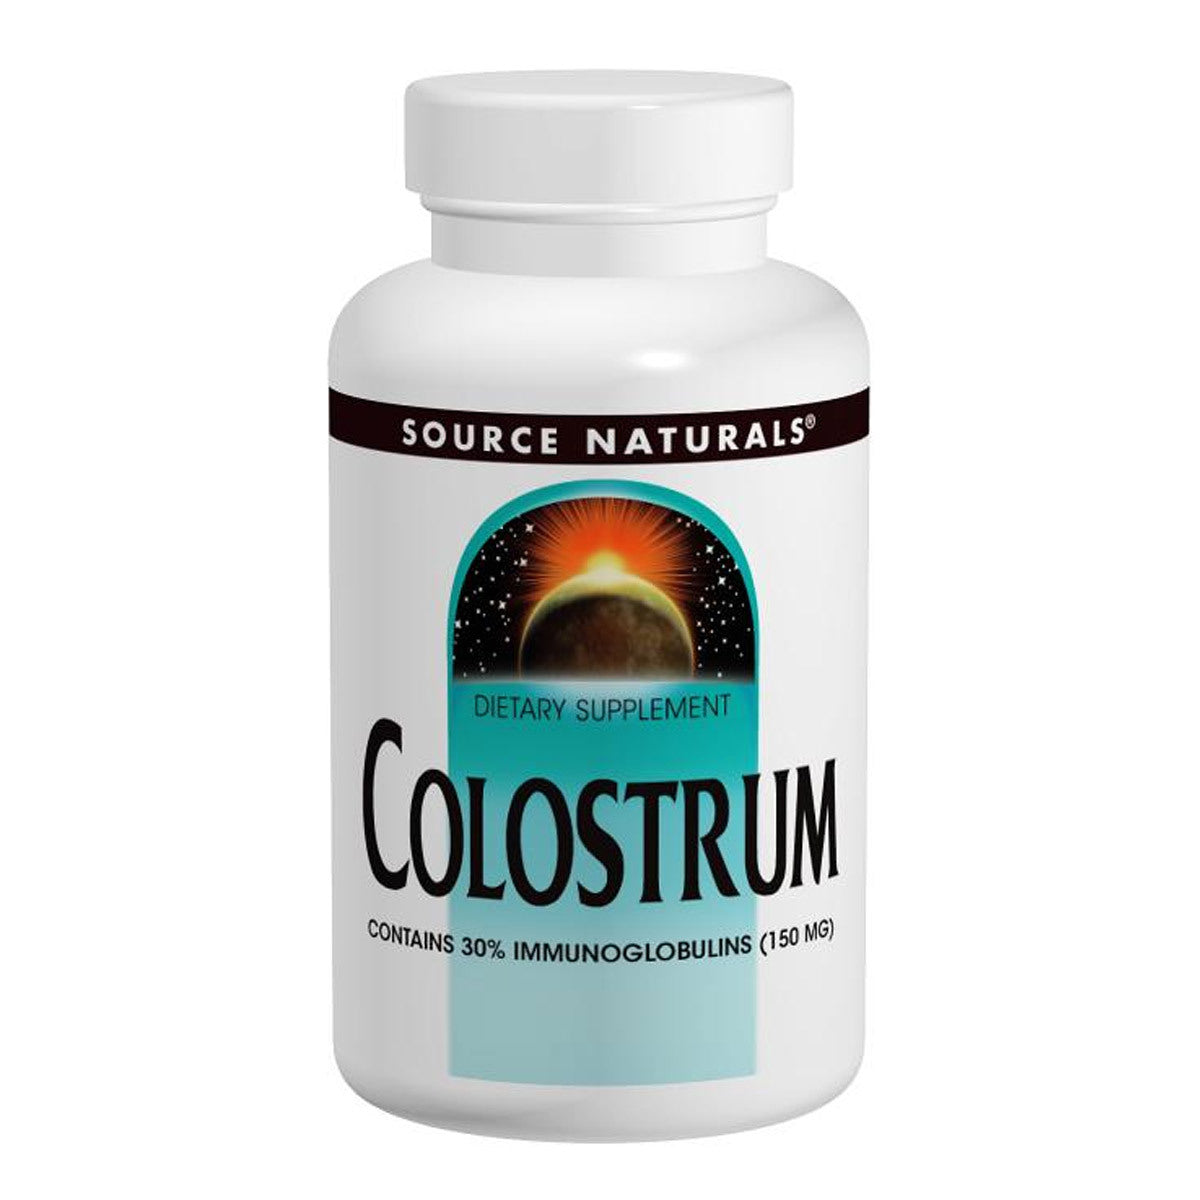 Primary image of Colostrum